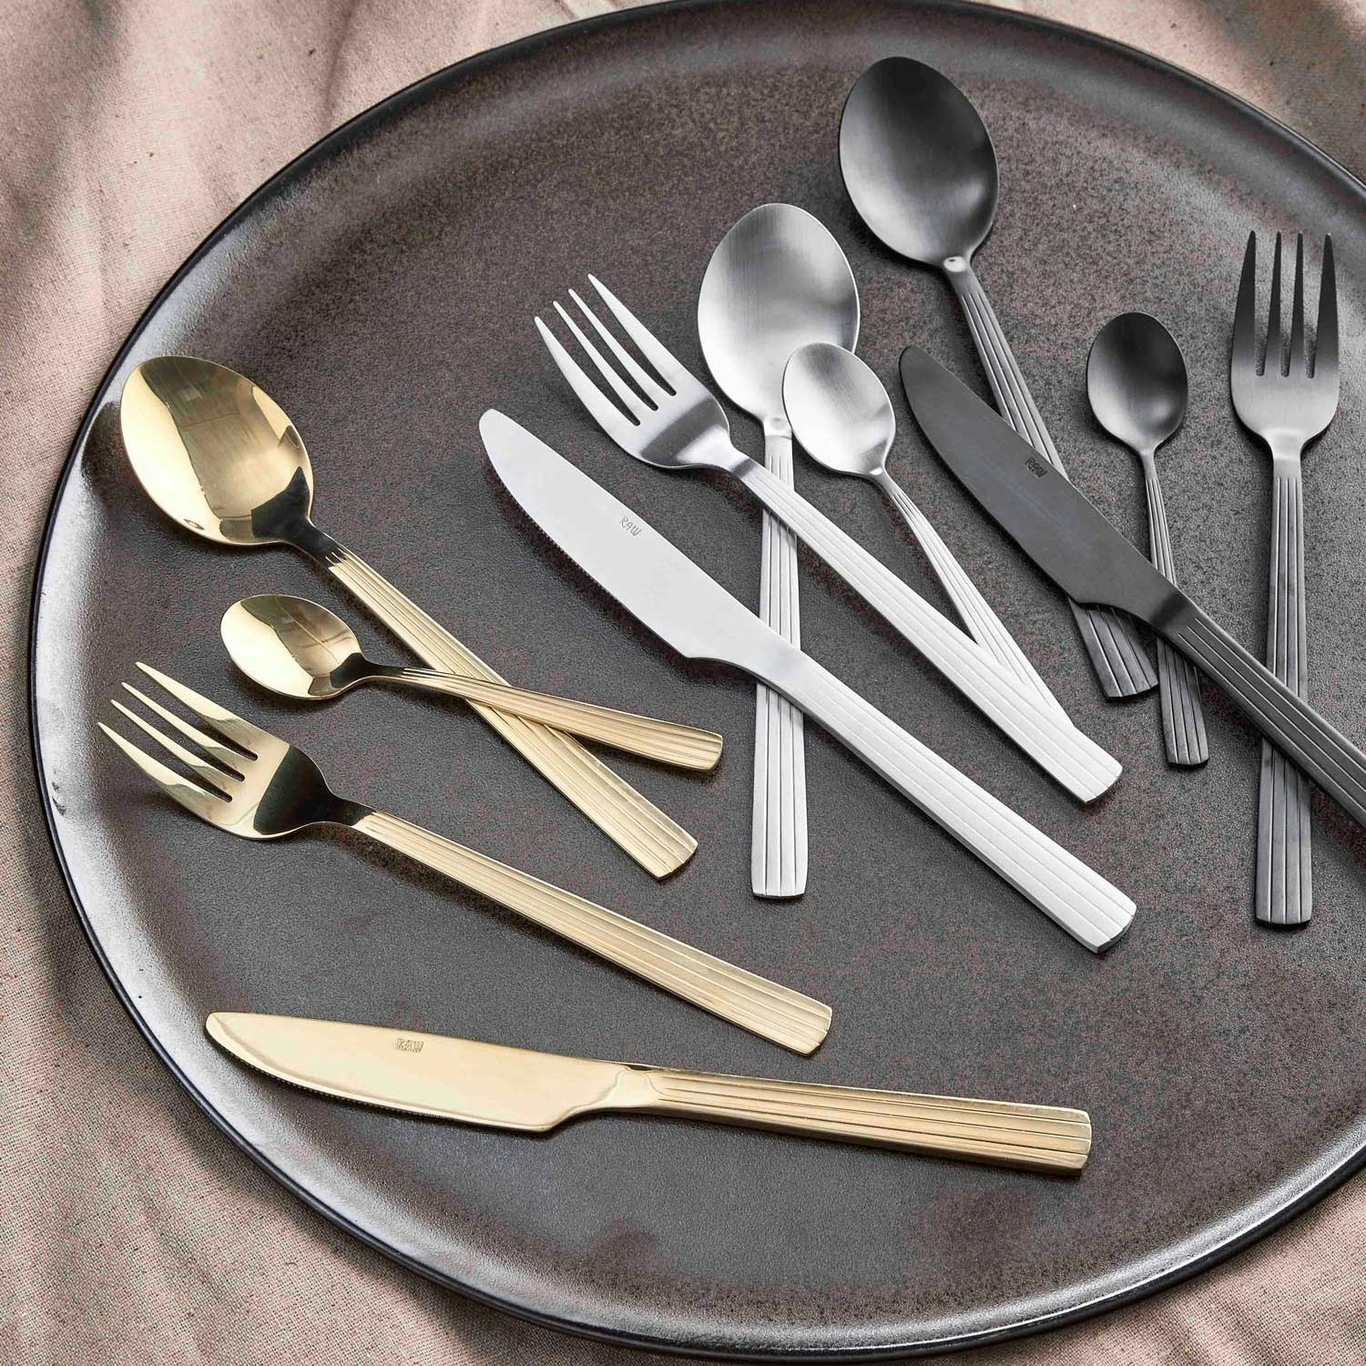 https://royaldesign.com/image/2/aida-raw-cutlery-set-48-pieces-19?w=800&quality=80